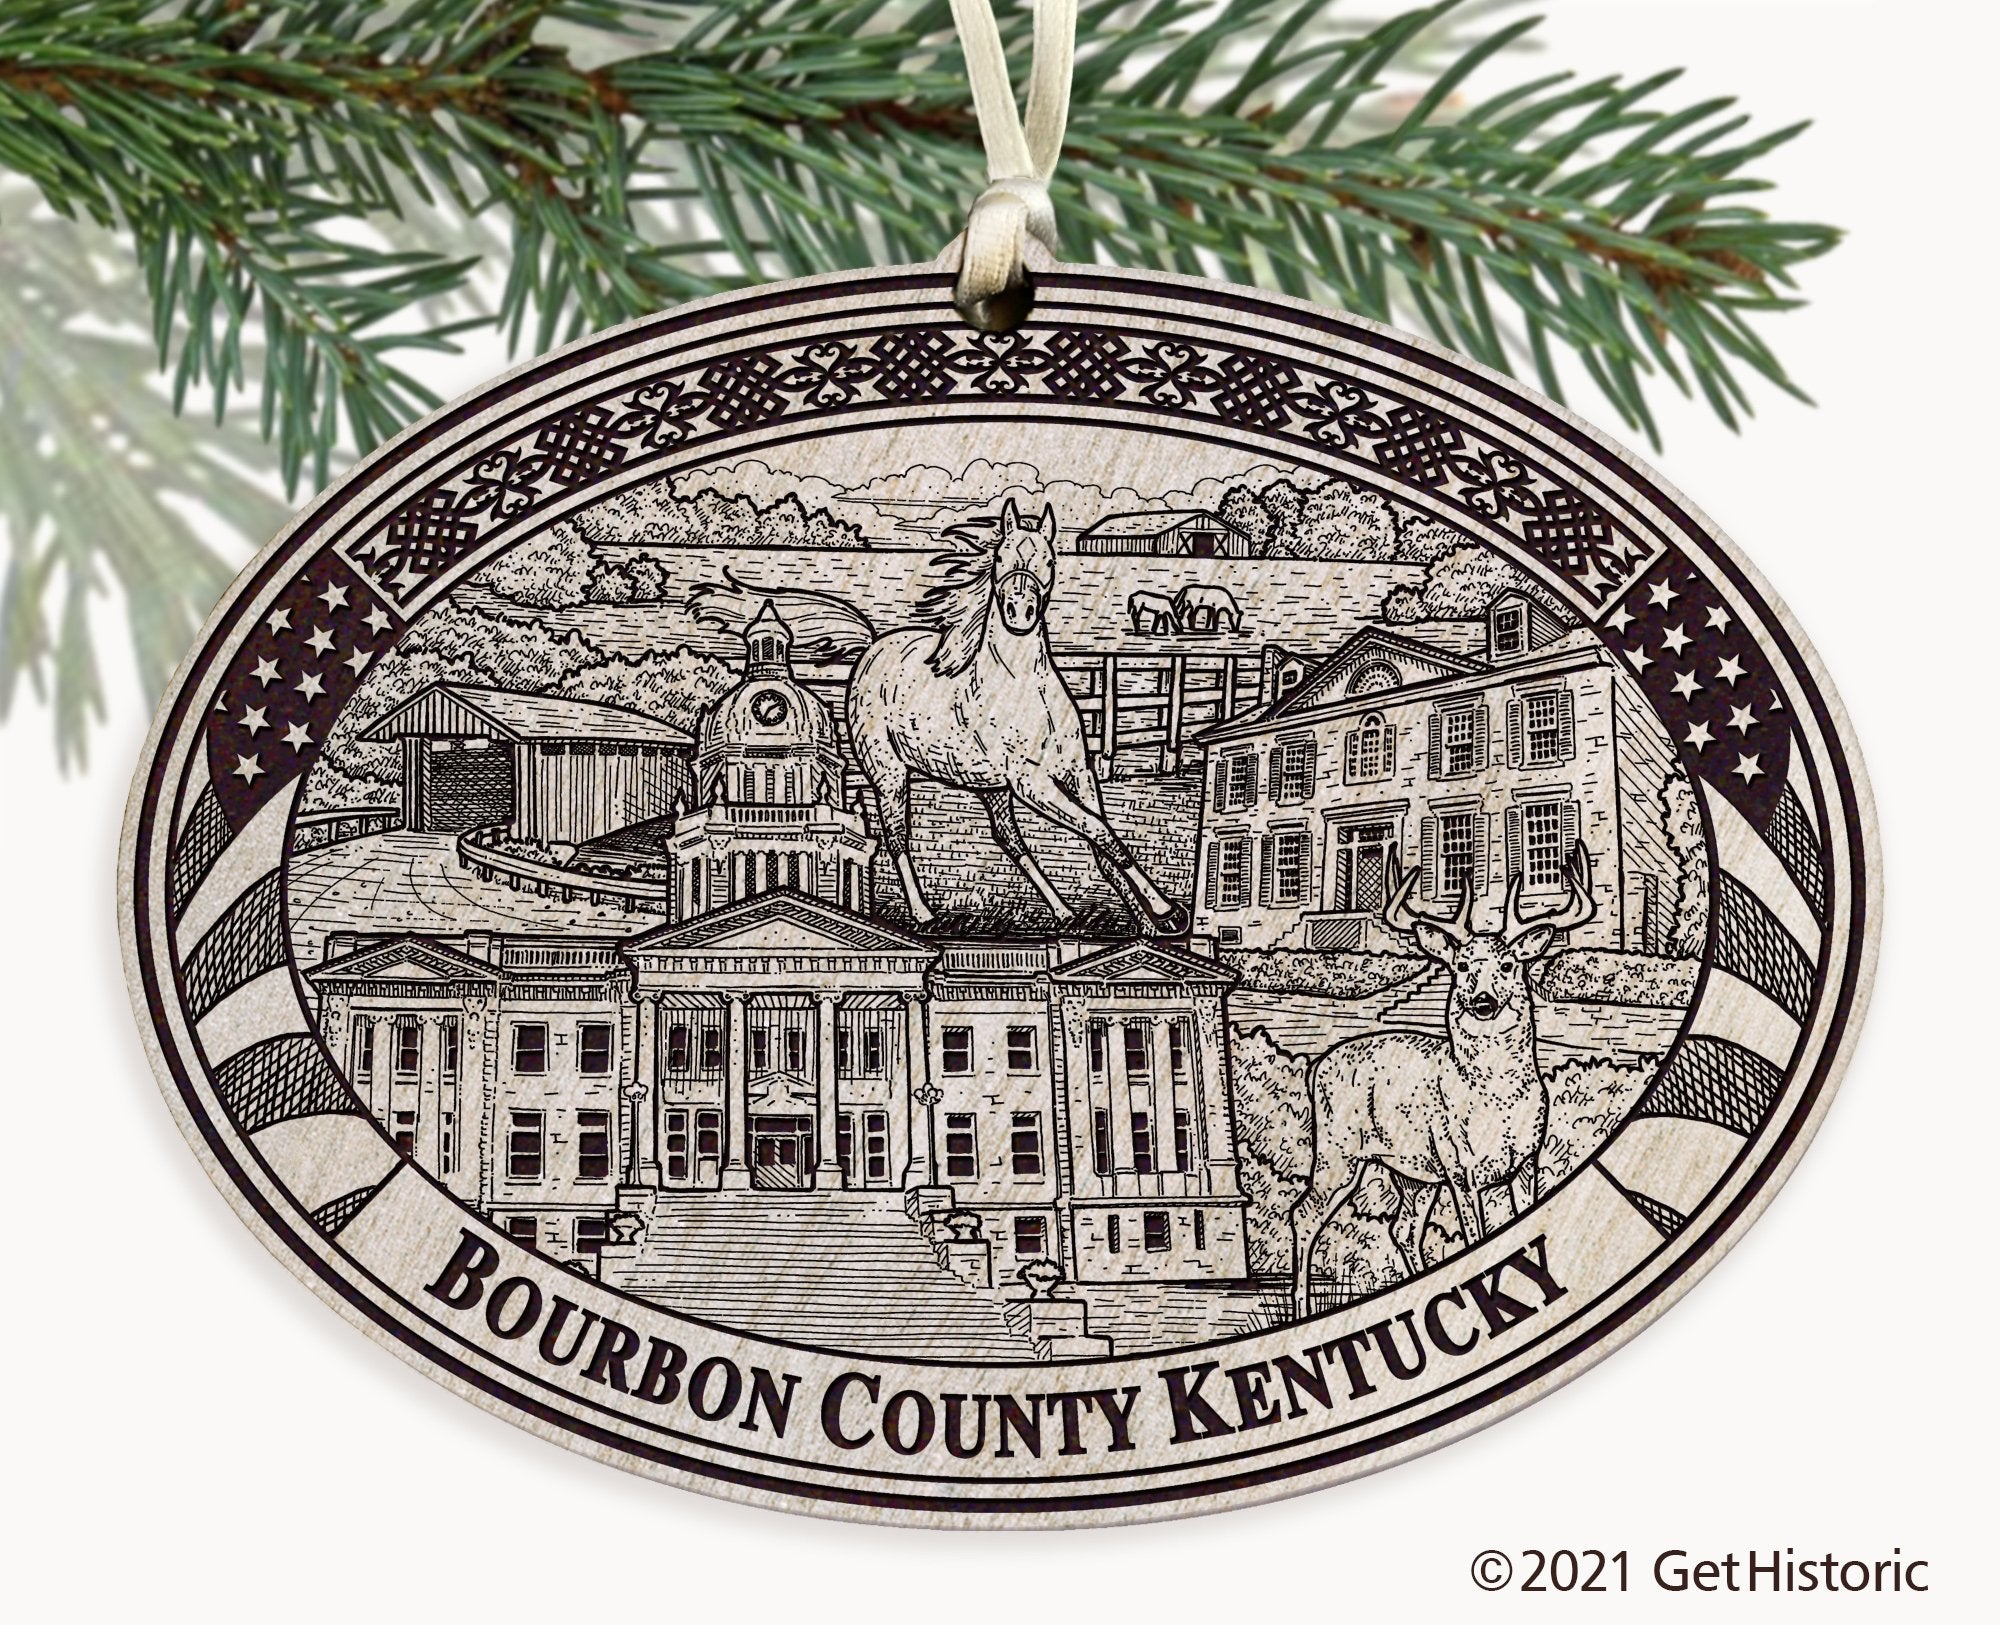 Bourbon County Kentucky Engraved Ornament